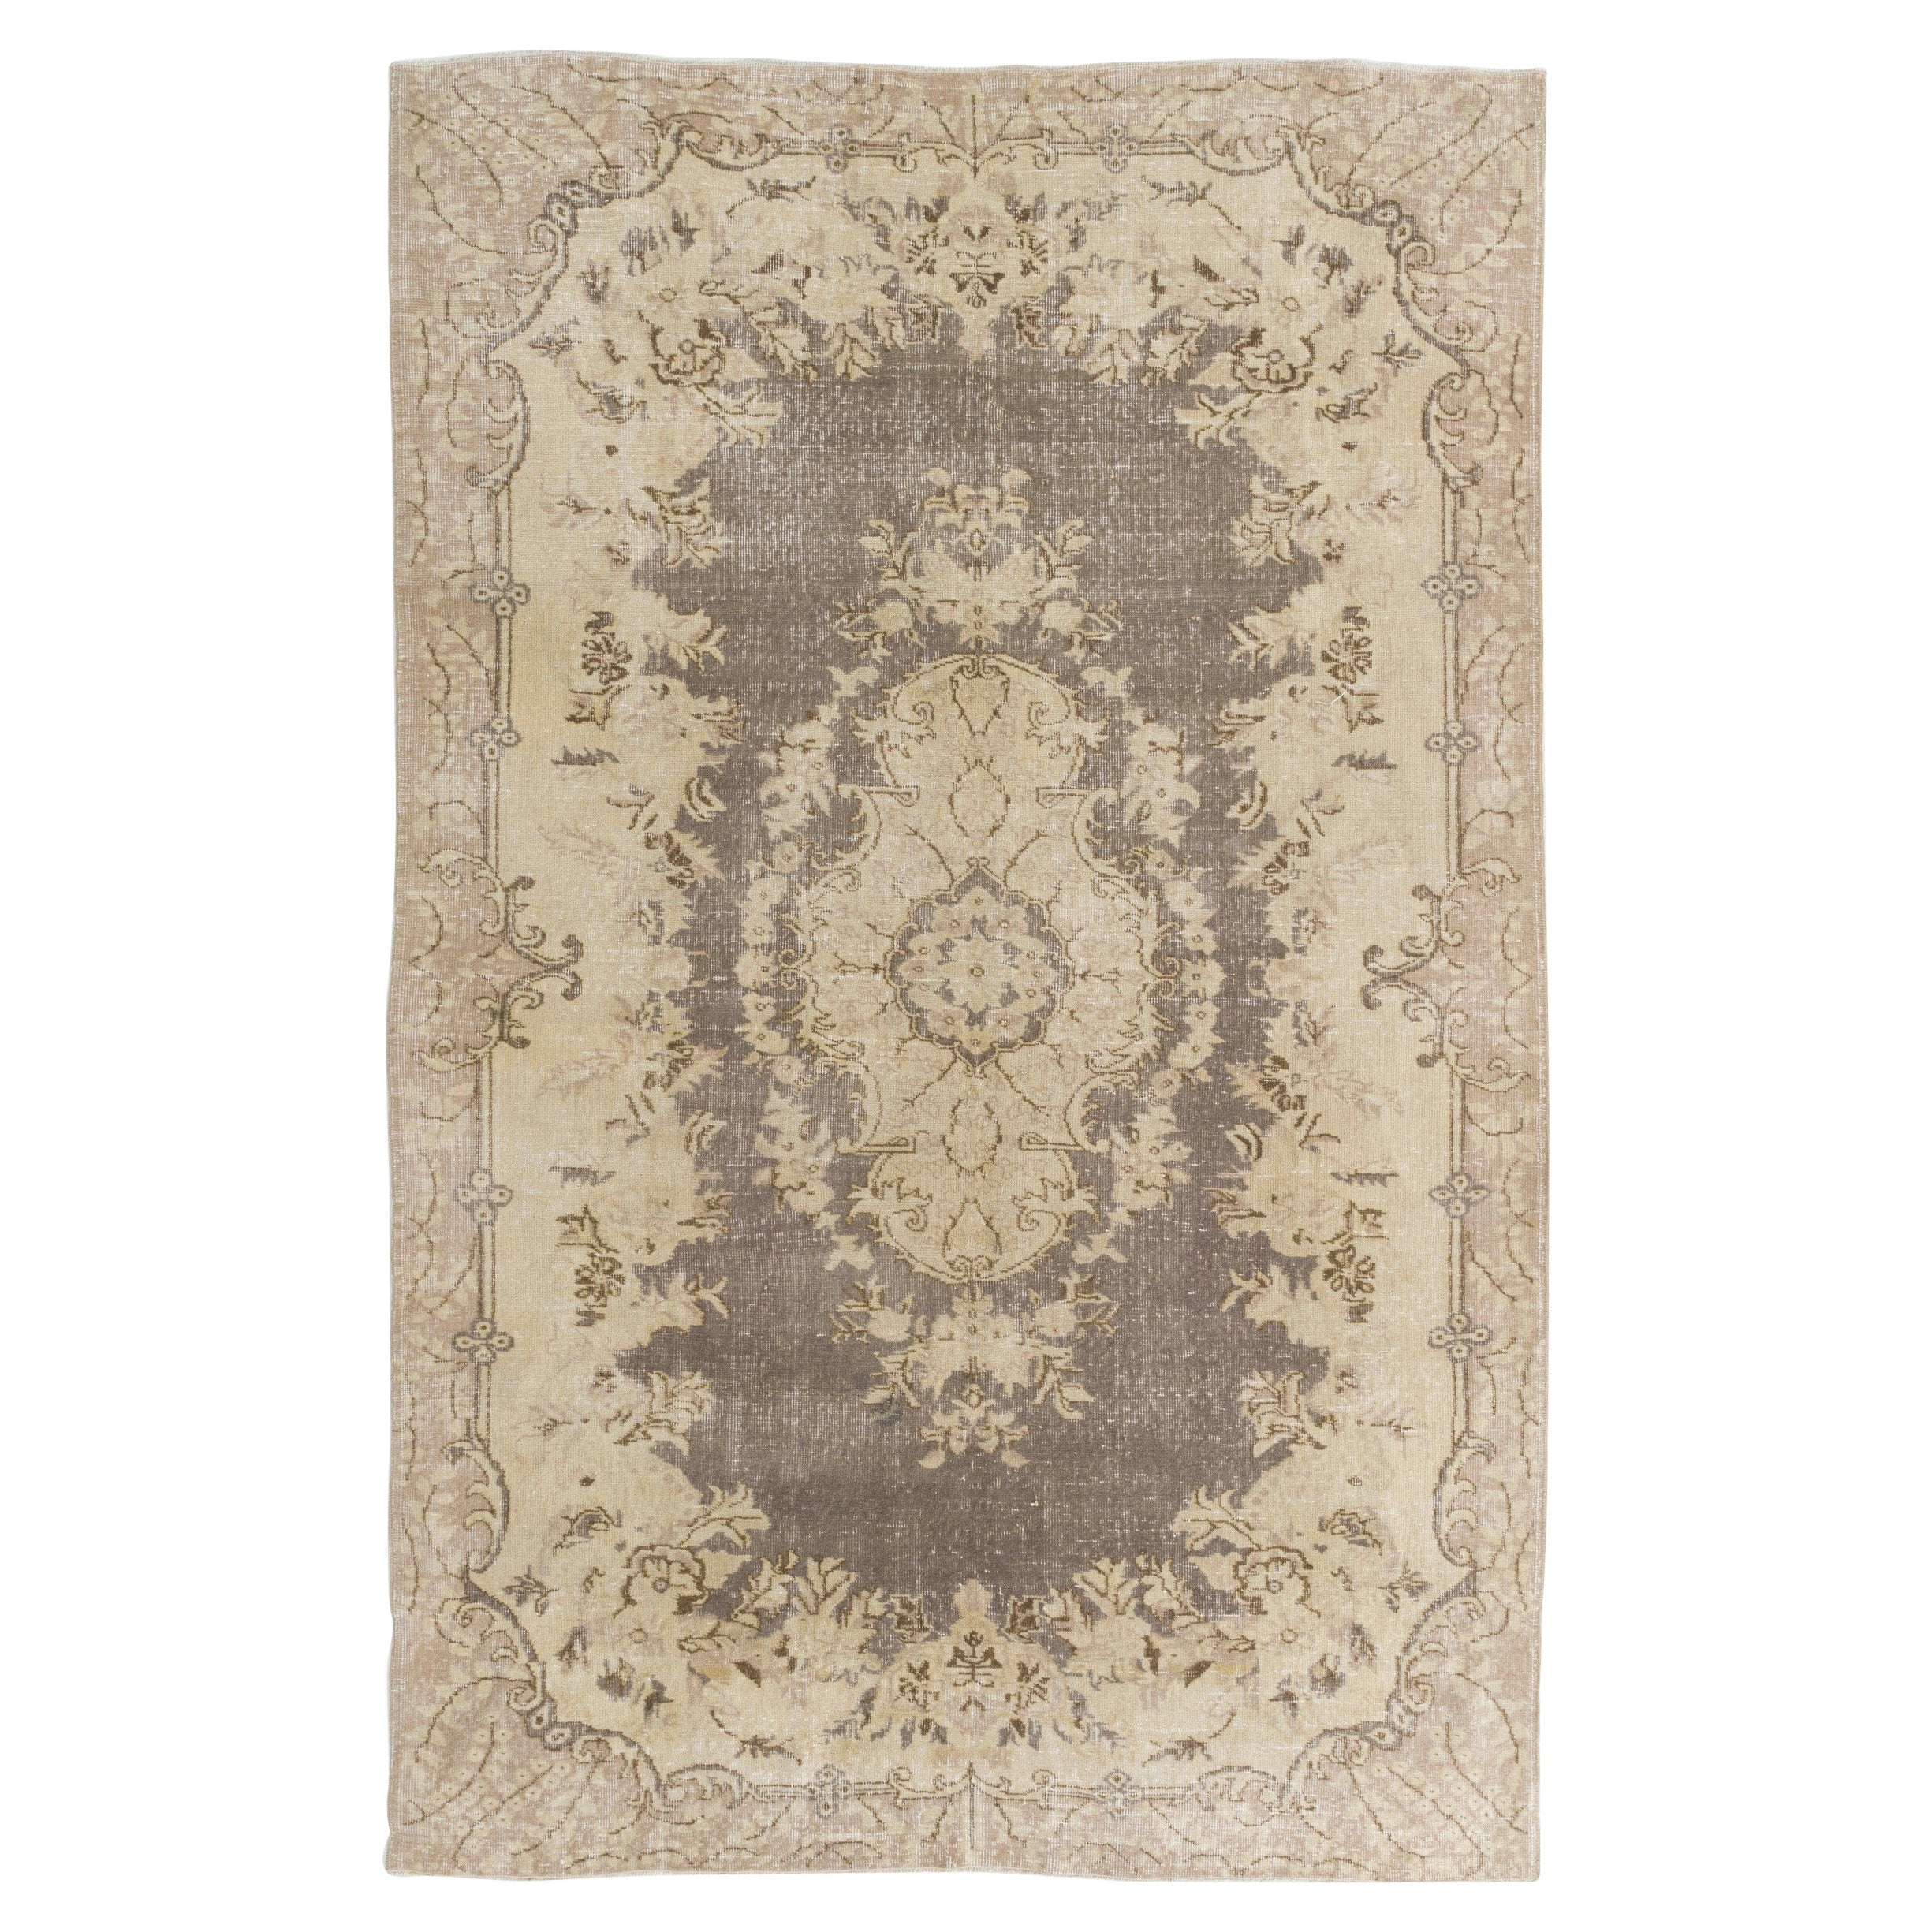 6.3x10 Ft Vintage Antique Washed Anatolian Oushak Area Rug, Living Room Carpet For Sale